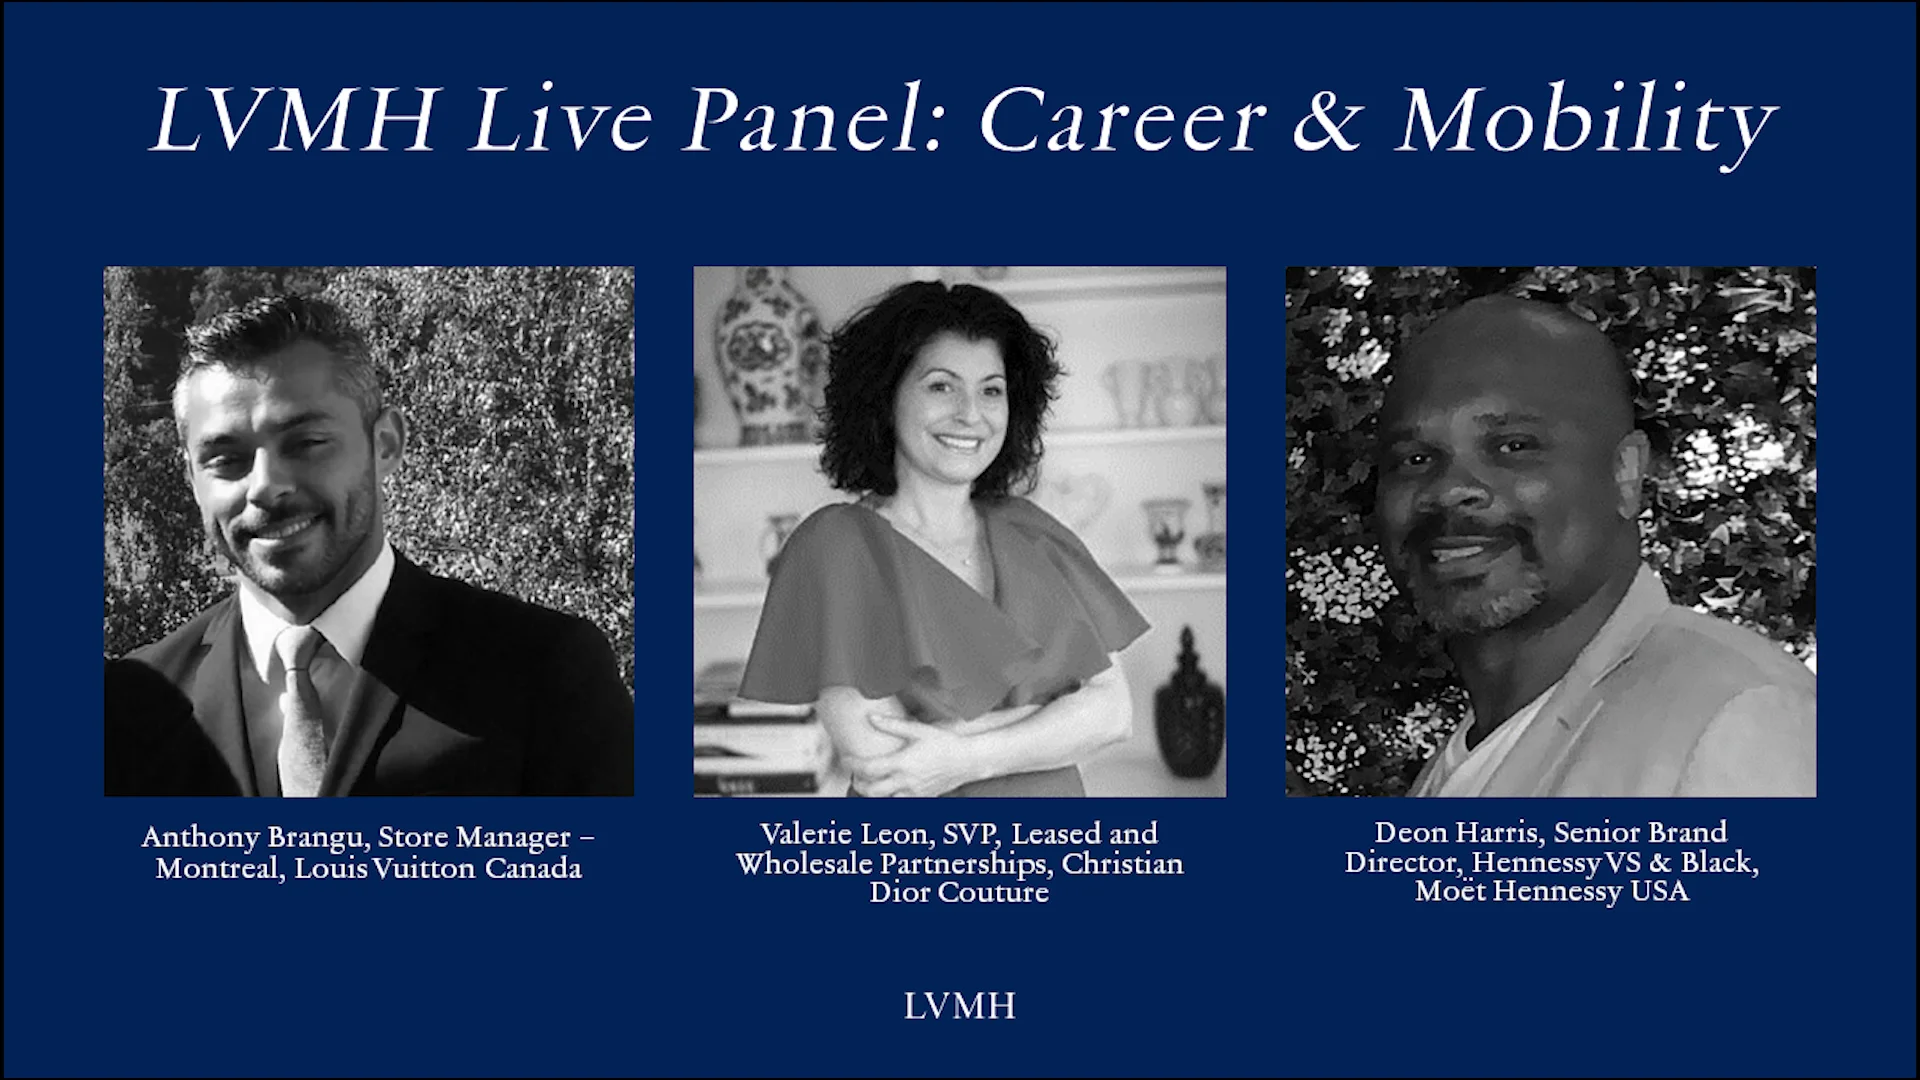 LVMH Live Panel: Career & Mobility - 9/24/2020 on Vimeo